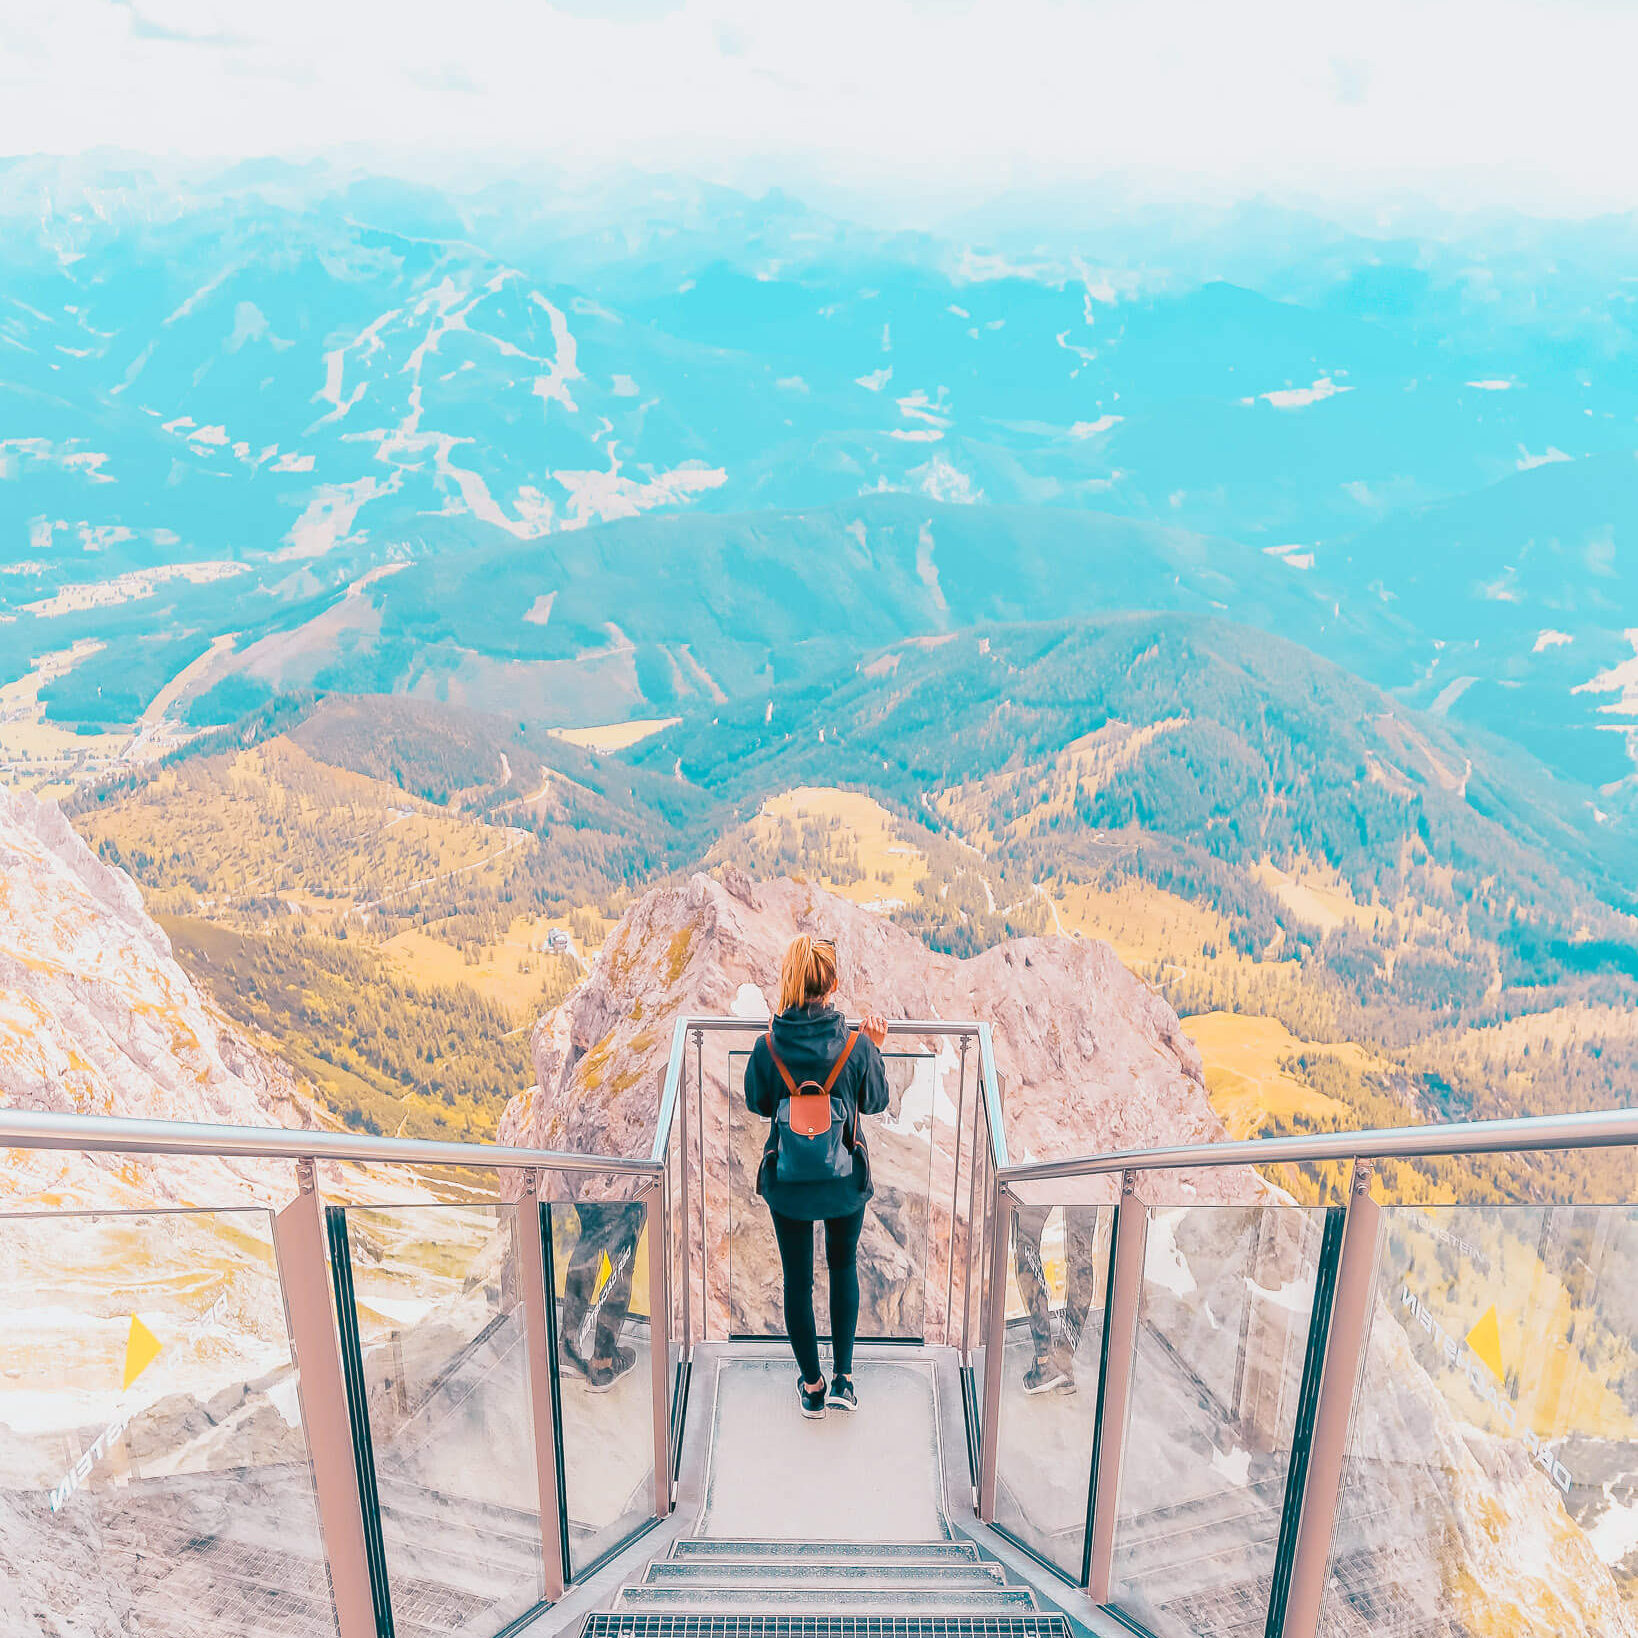 Stairway to nothingness, Dachstein Mountain, Austria